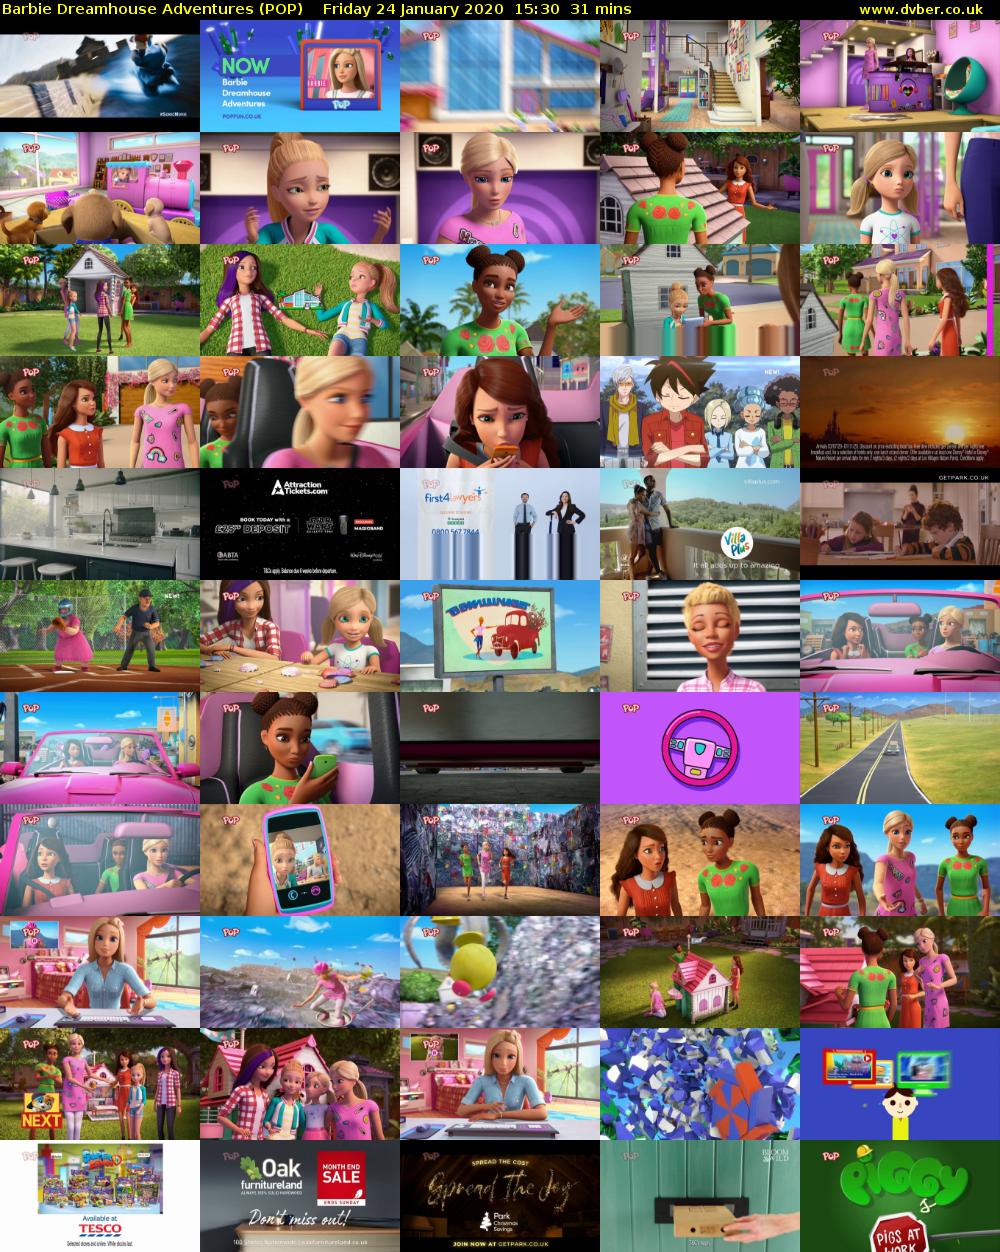 Barbie Dreamhouse Adventures (POP) Friday 24 January 2020 15:30 - 16:01